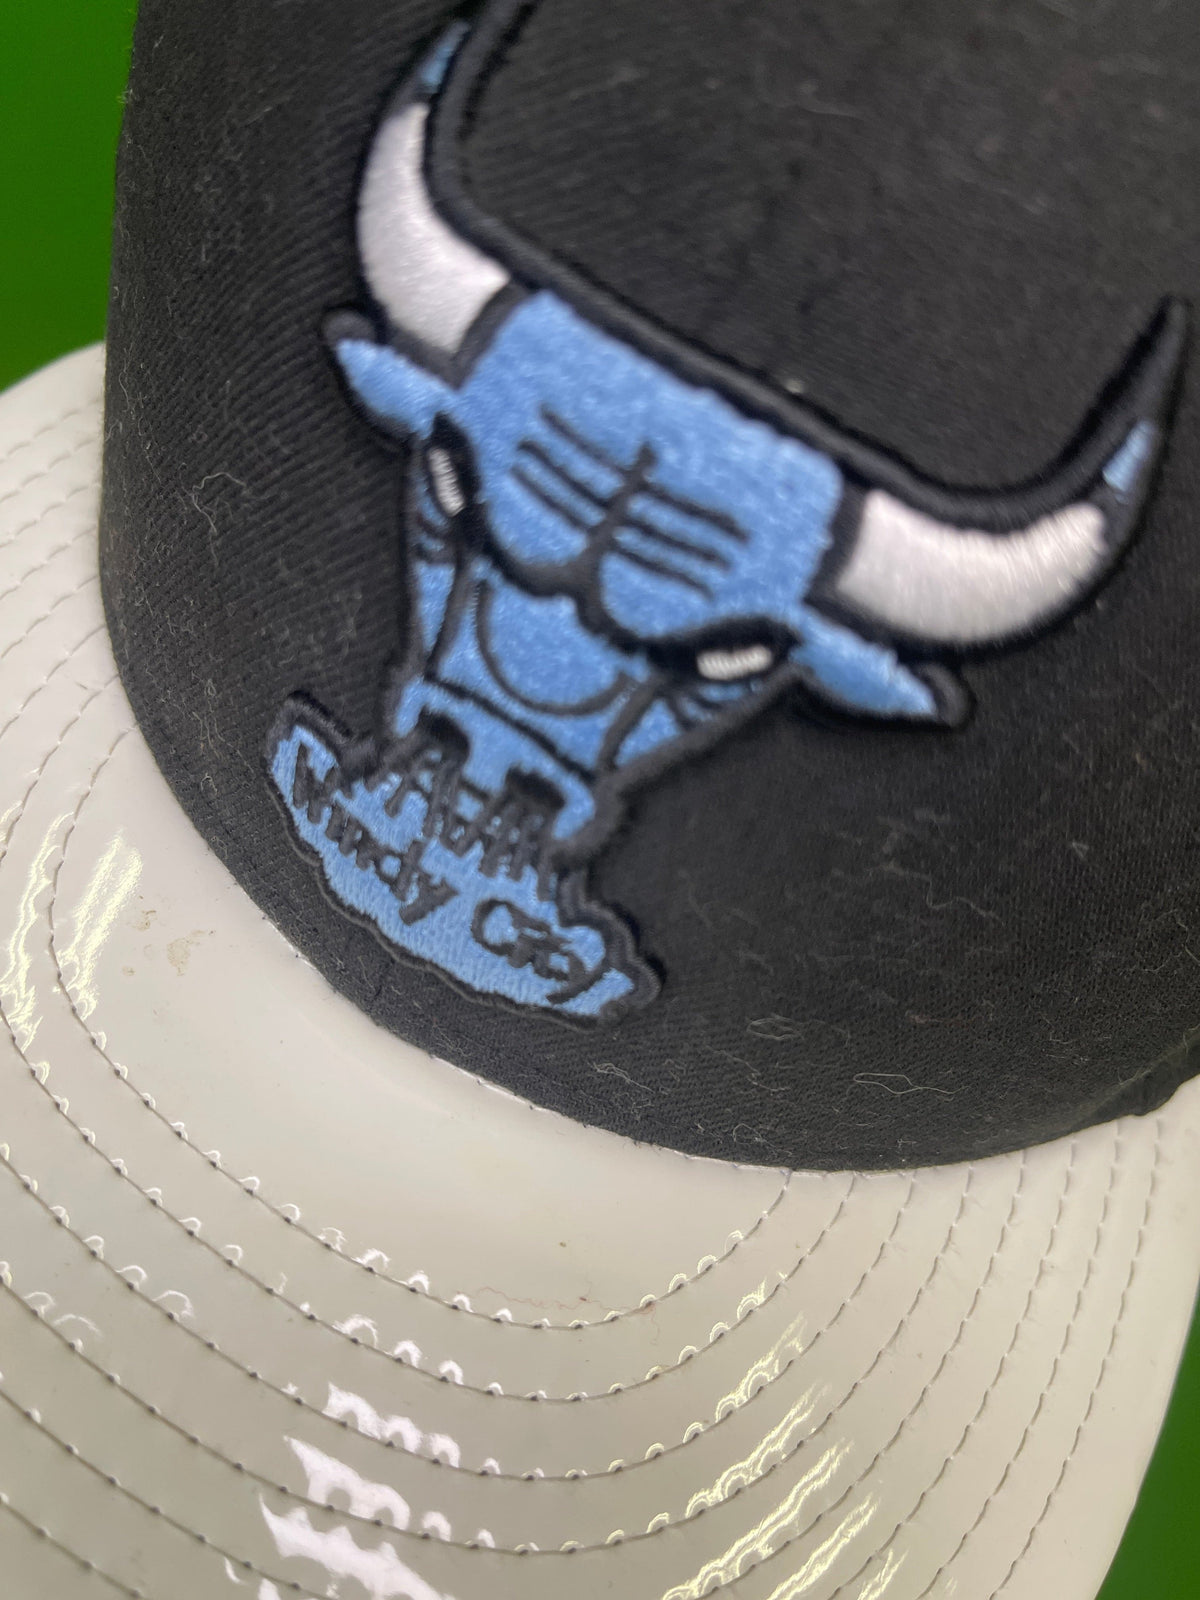 NBA Chicago Bulls New Era 9FIFTY Hat/Cap Snapback Medium/Large OSFM`